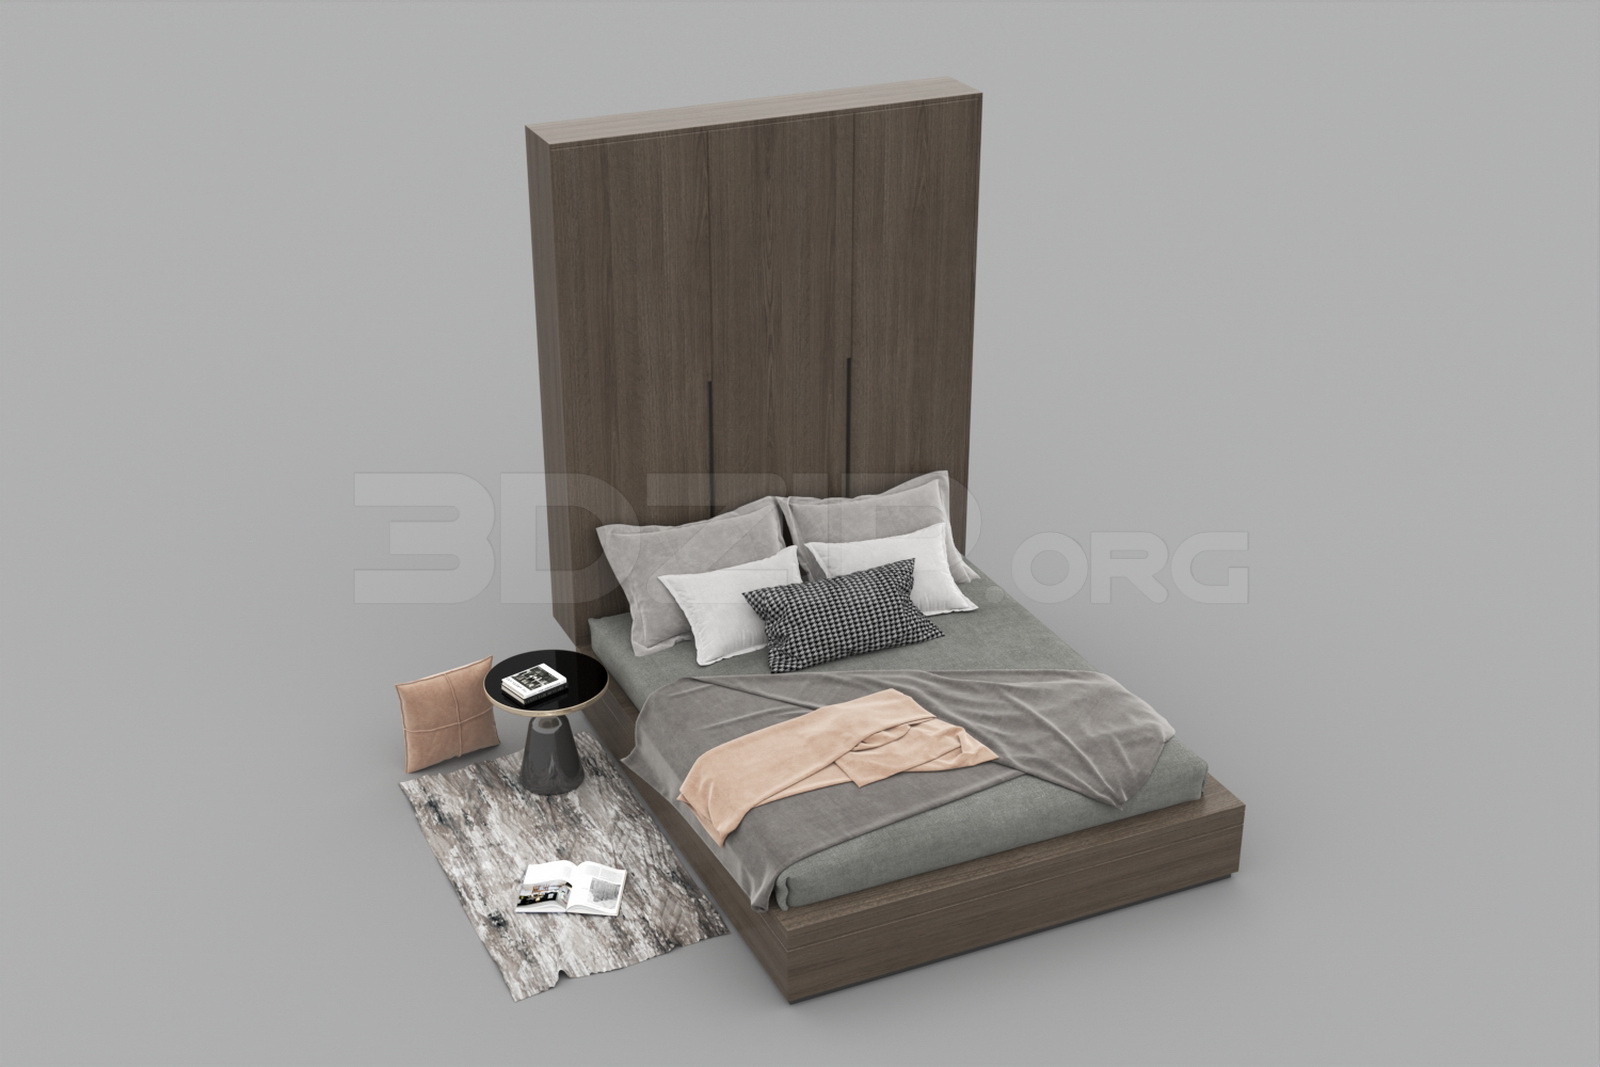 707. Free 3D Bed Model Download